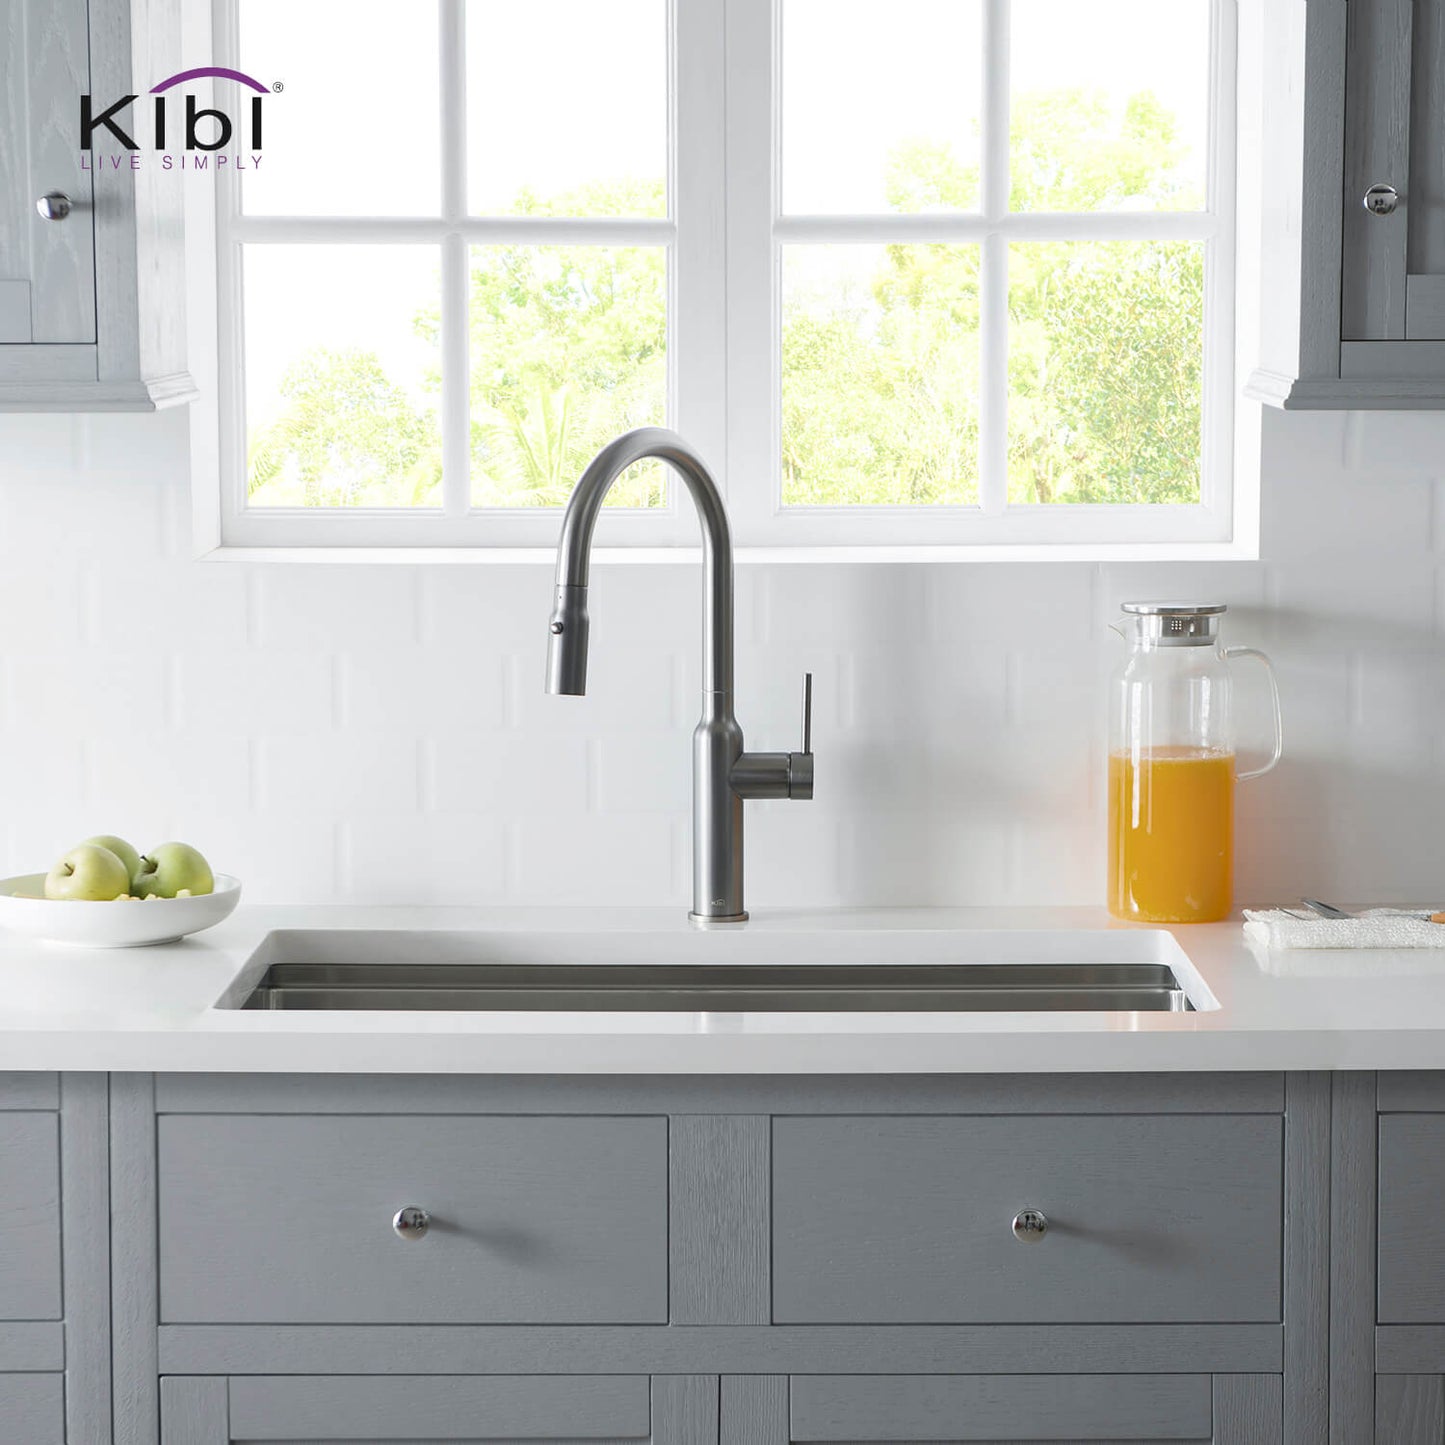 Kibi Hilo Single Handle High Arc Pull Down Kitchen Faucet in Titanium Finish